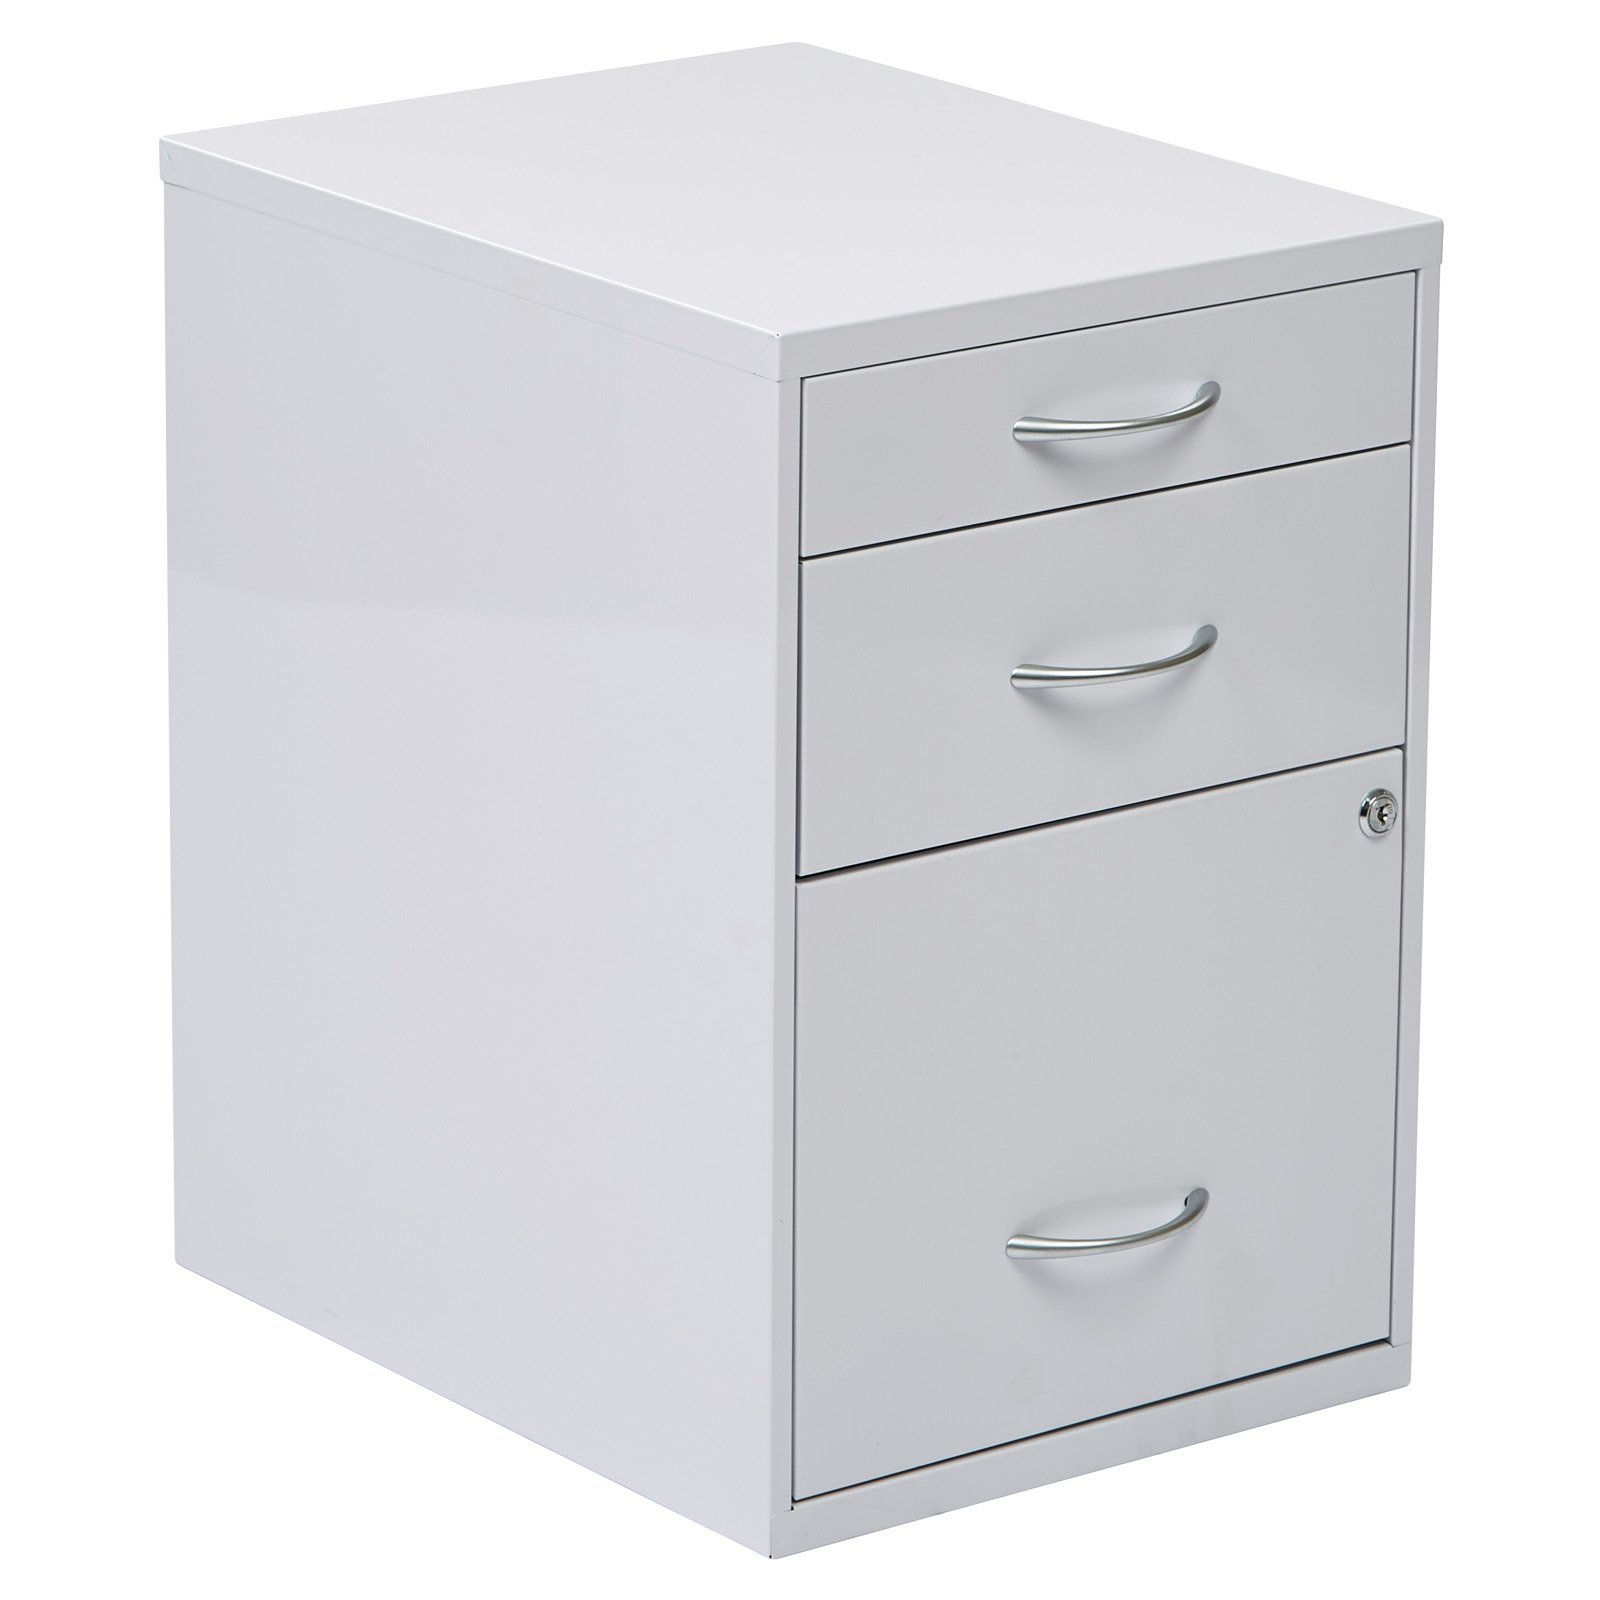 Osp Designs 3 Drawer Vertical Metal Lockable Filing Cabinet White throughout size 1600 X 1600